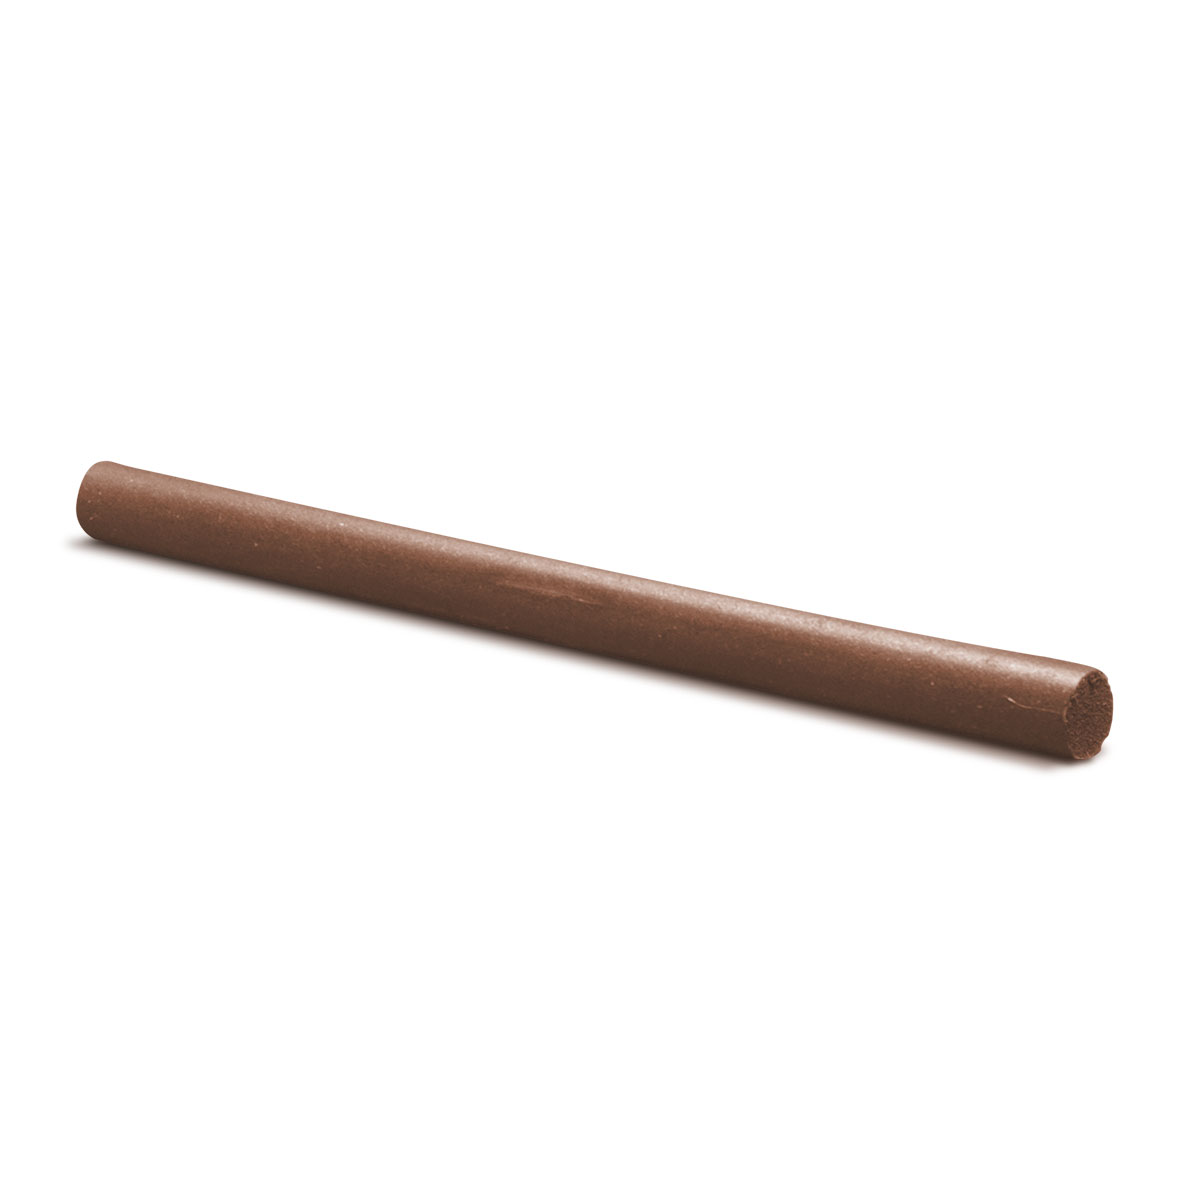 Cratex grinding stick, Ø 12,5 x 150 mm, Grain size 120, Round, Light brown